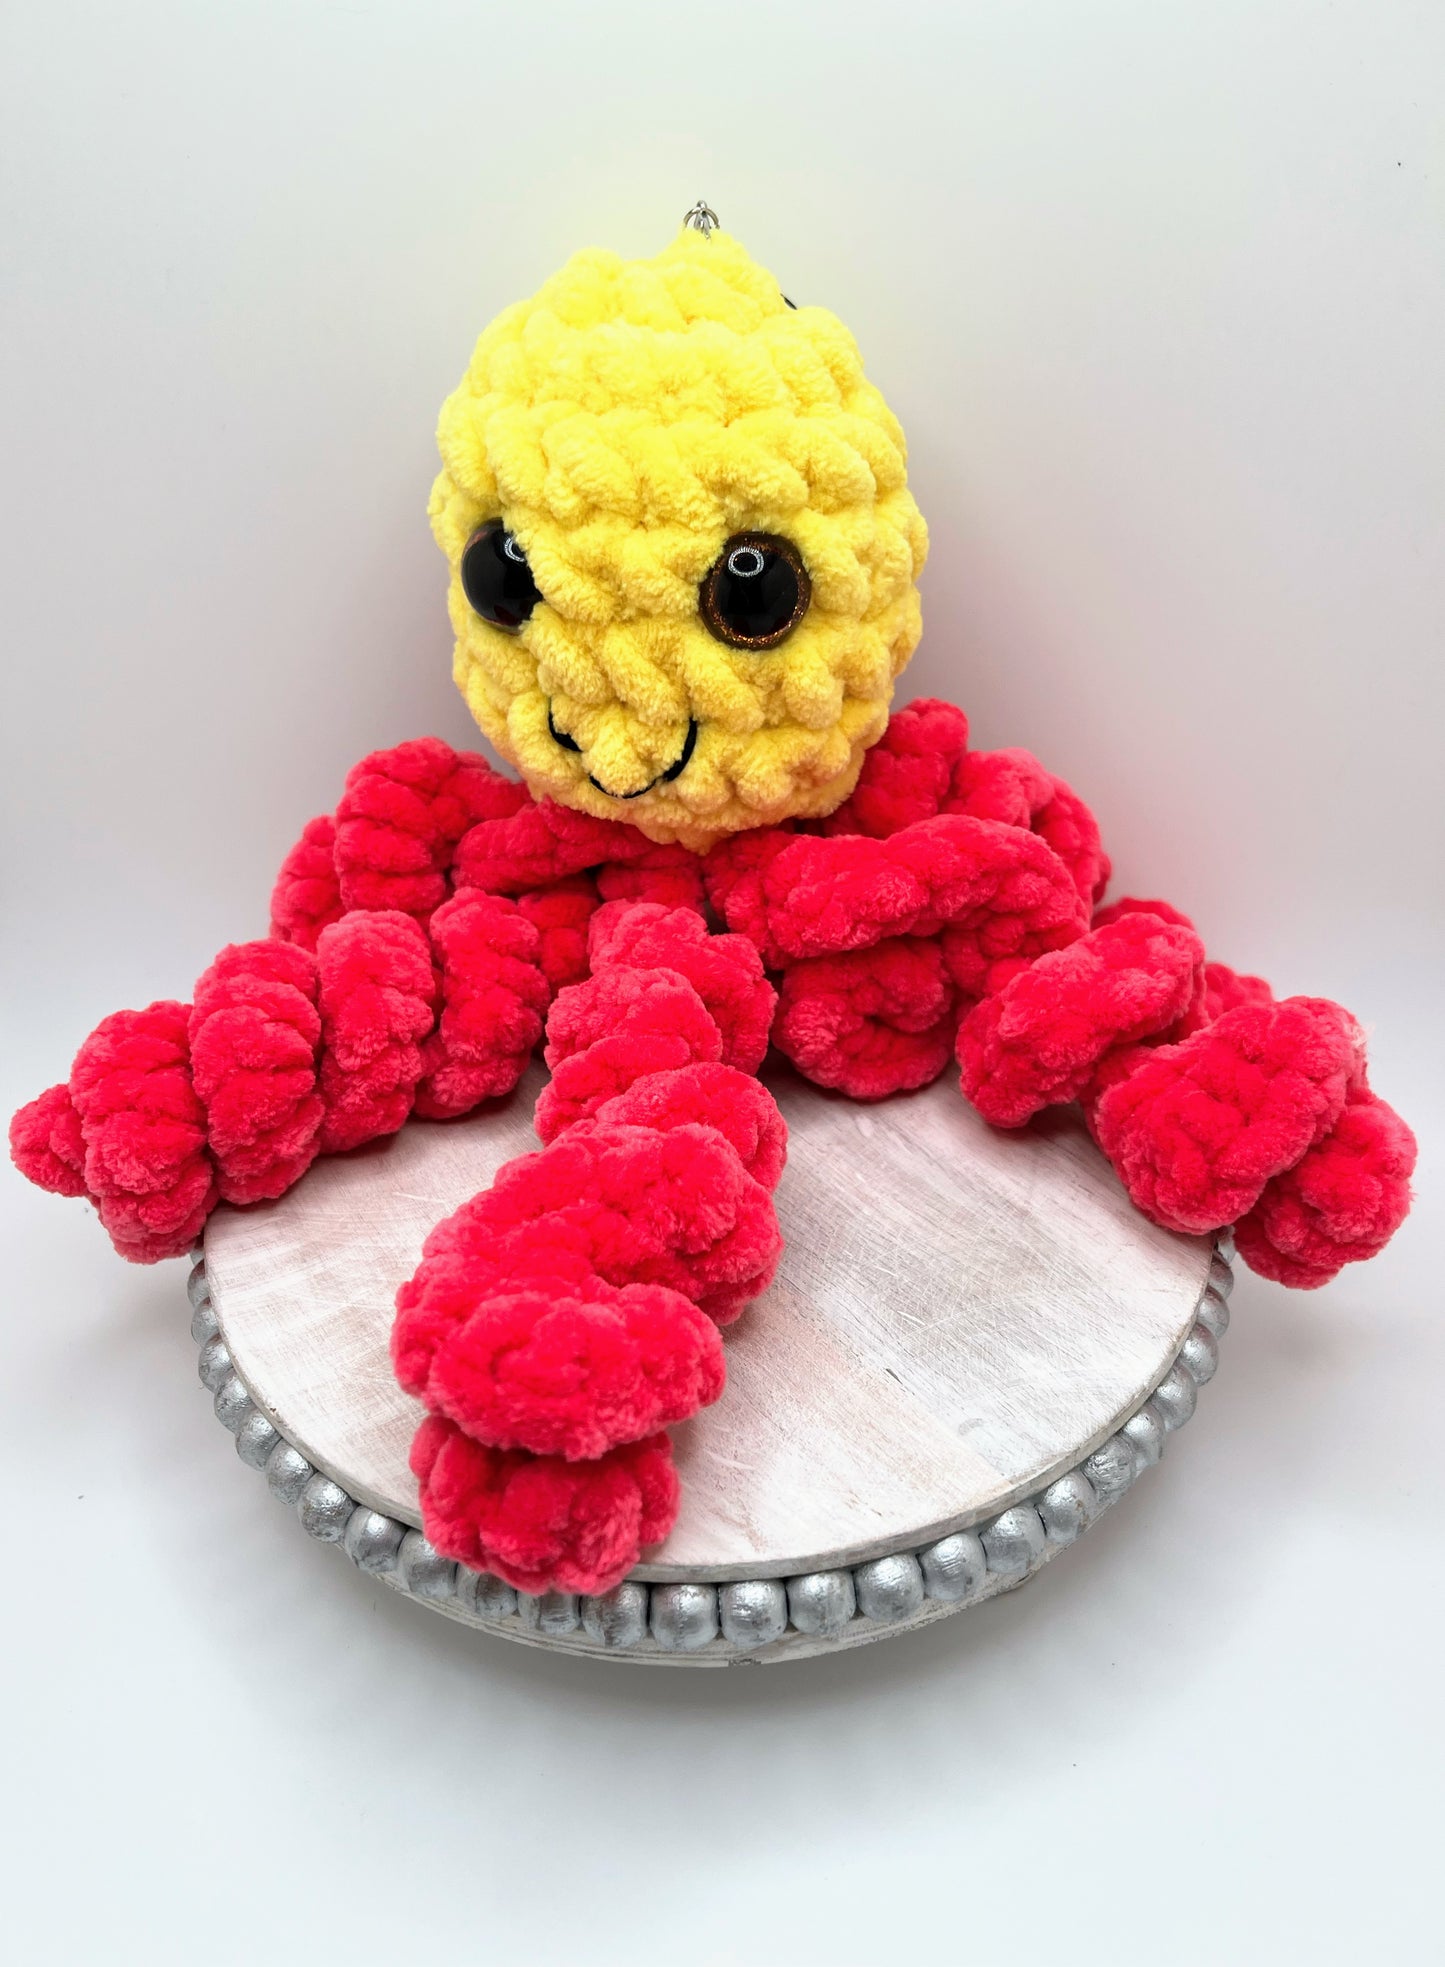 Stuffed Yellow Hot Pink Jellyfish - Crochet Knitted Amigurumi Toy